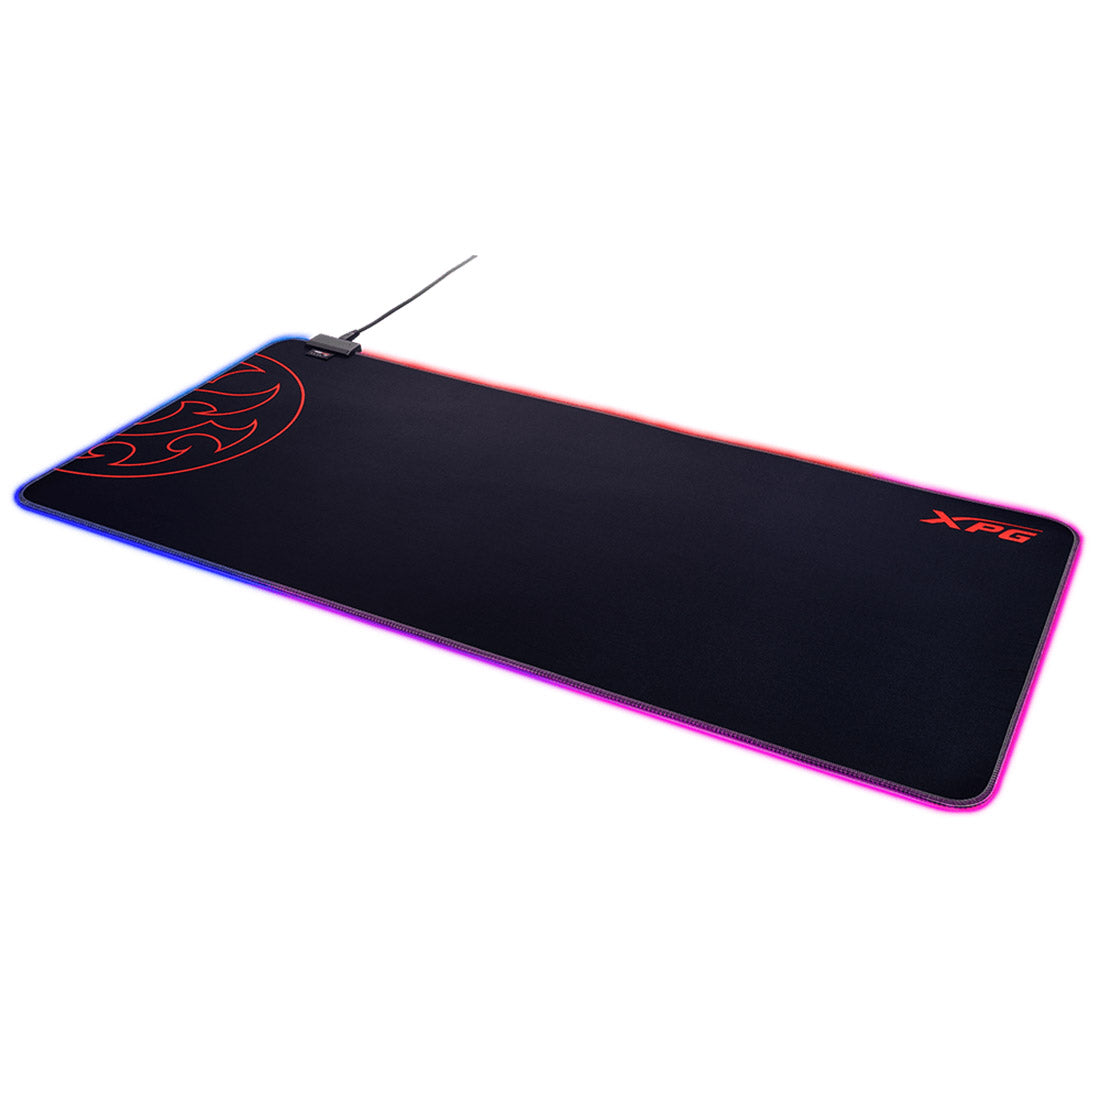 XPG Battleground XL PRIME RGB Gaming Mousepad with CORDURA Fabric